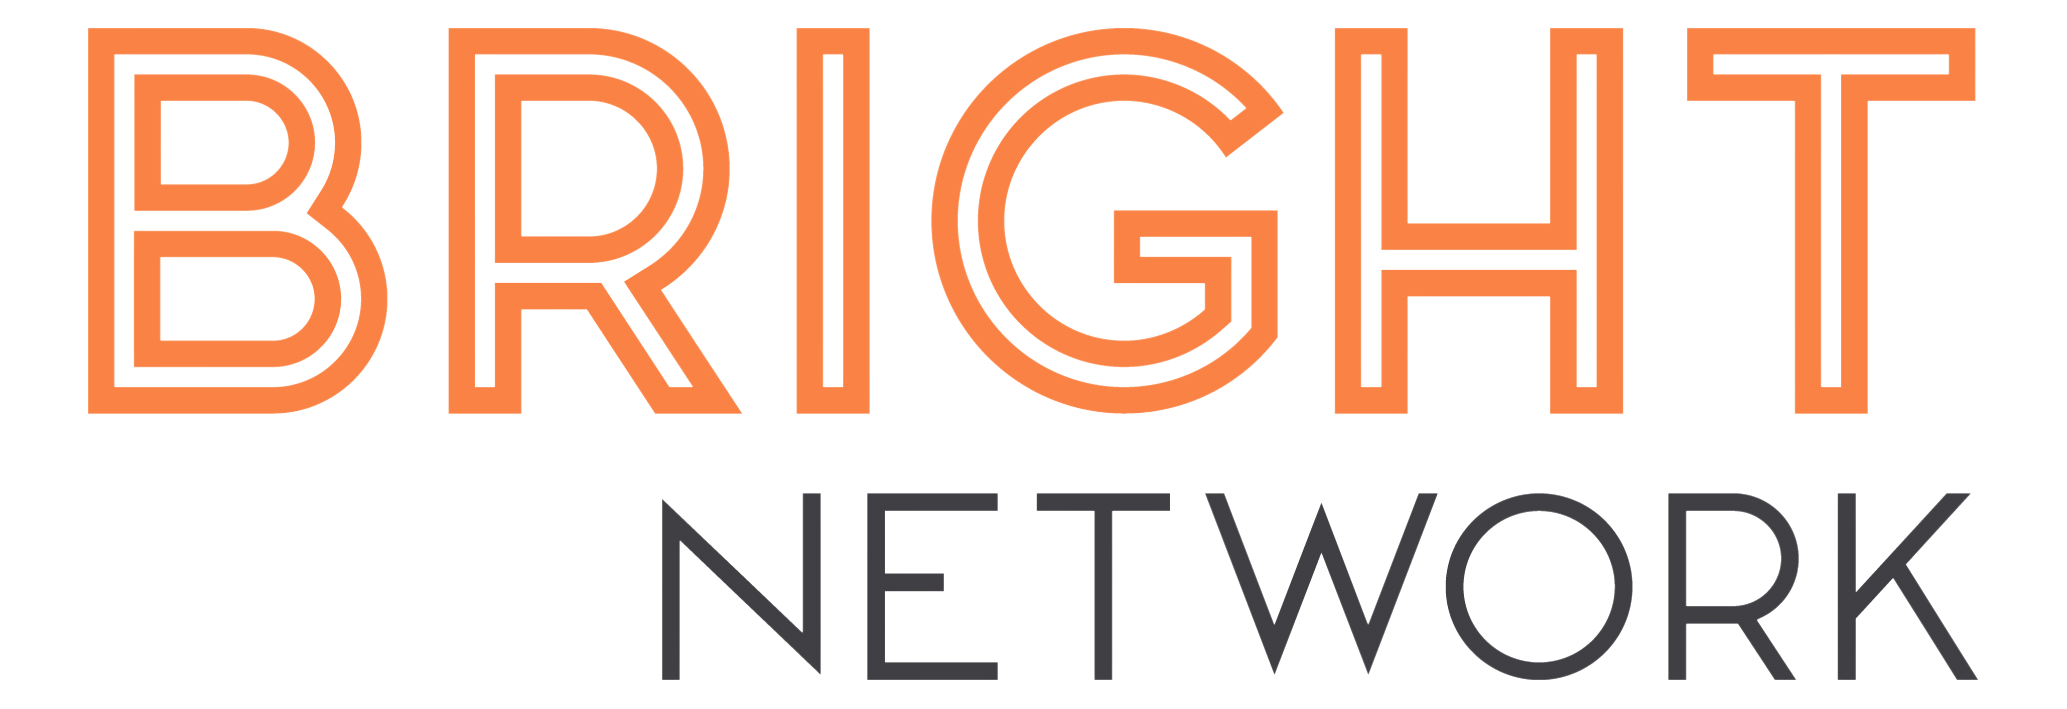 BRIGHT NETWORK [logo]